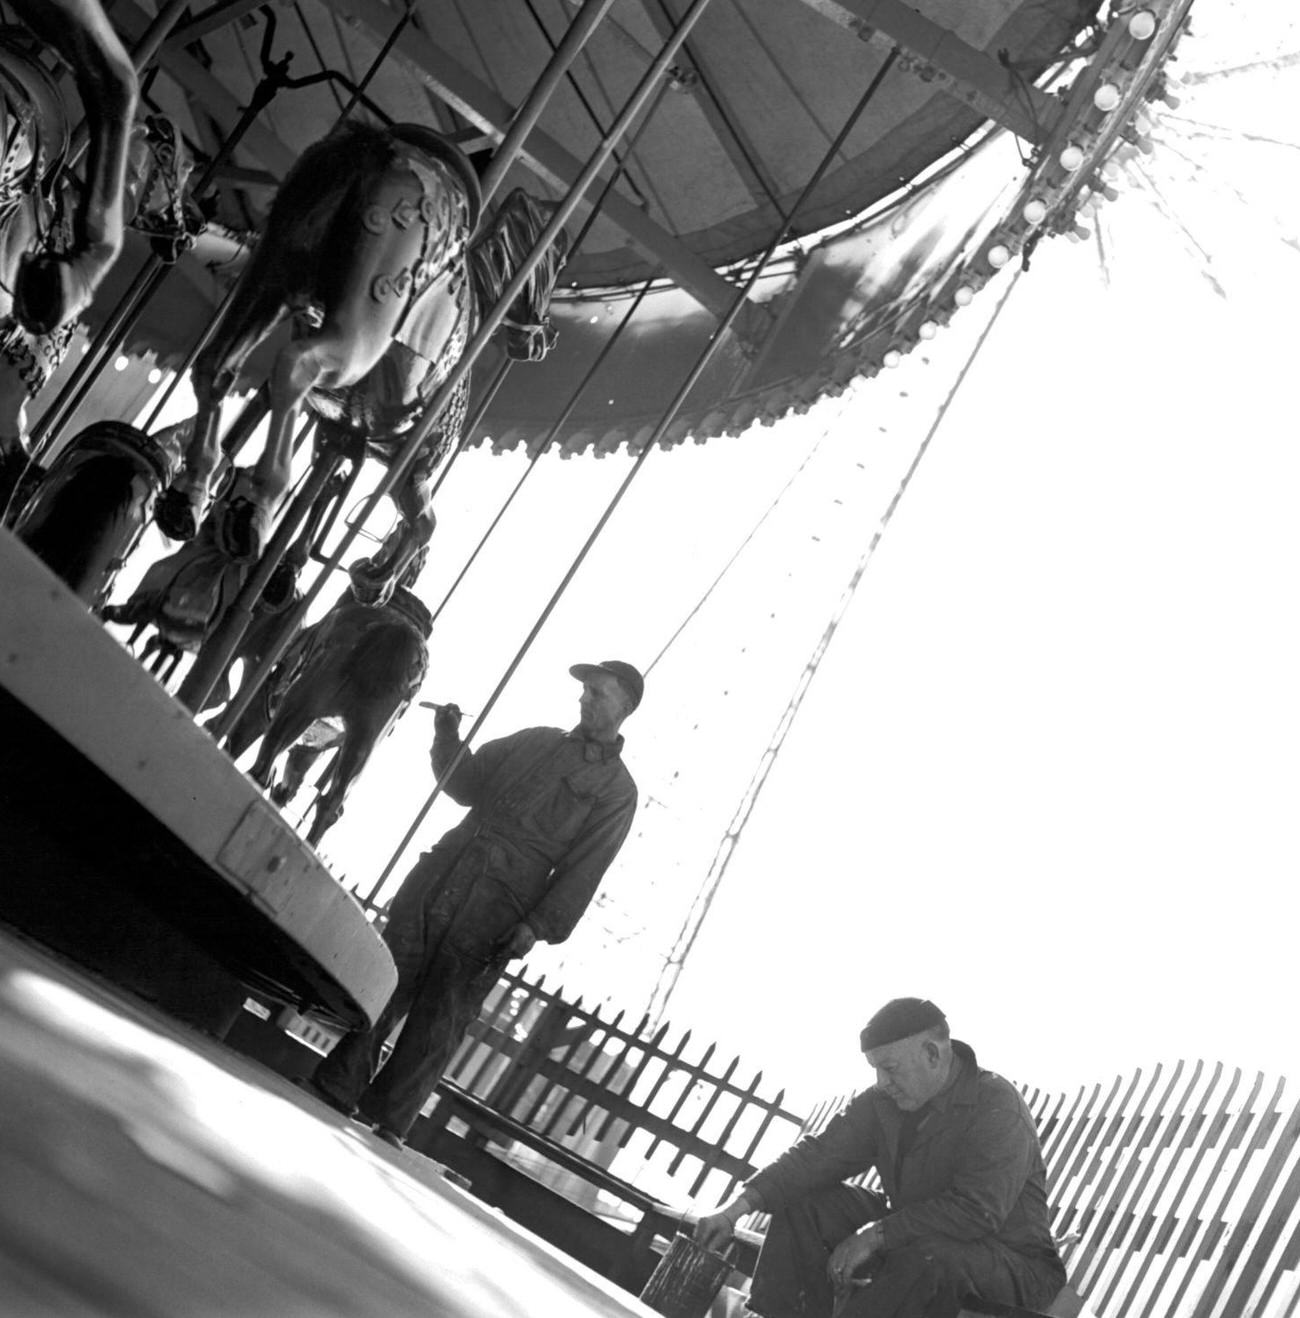 Carousel Preparation For Summer Season, 1955